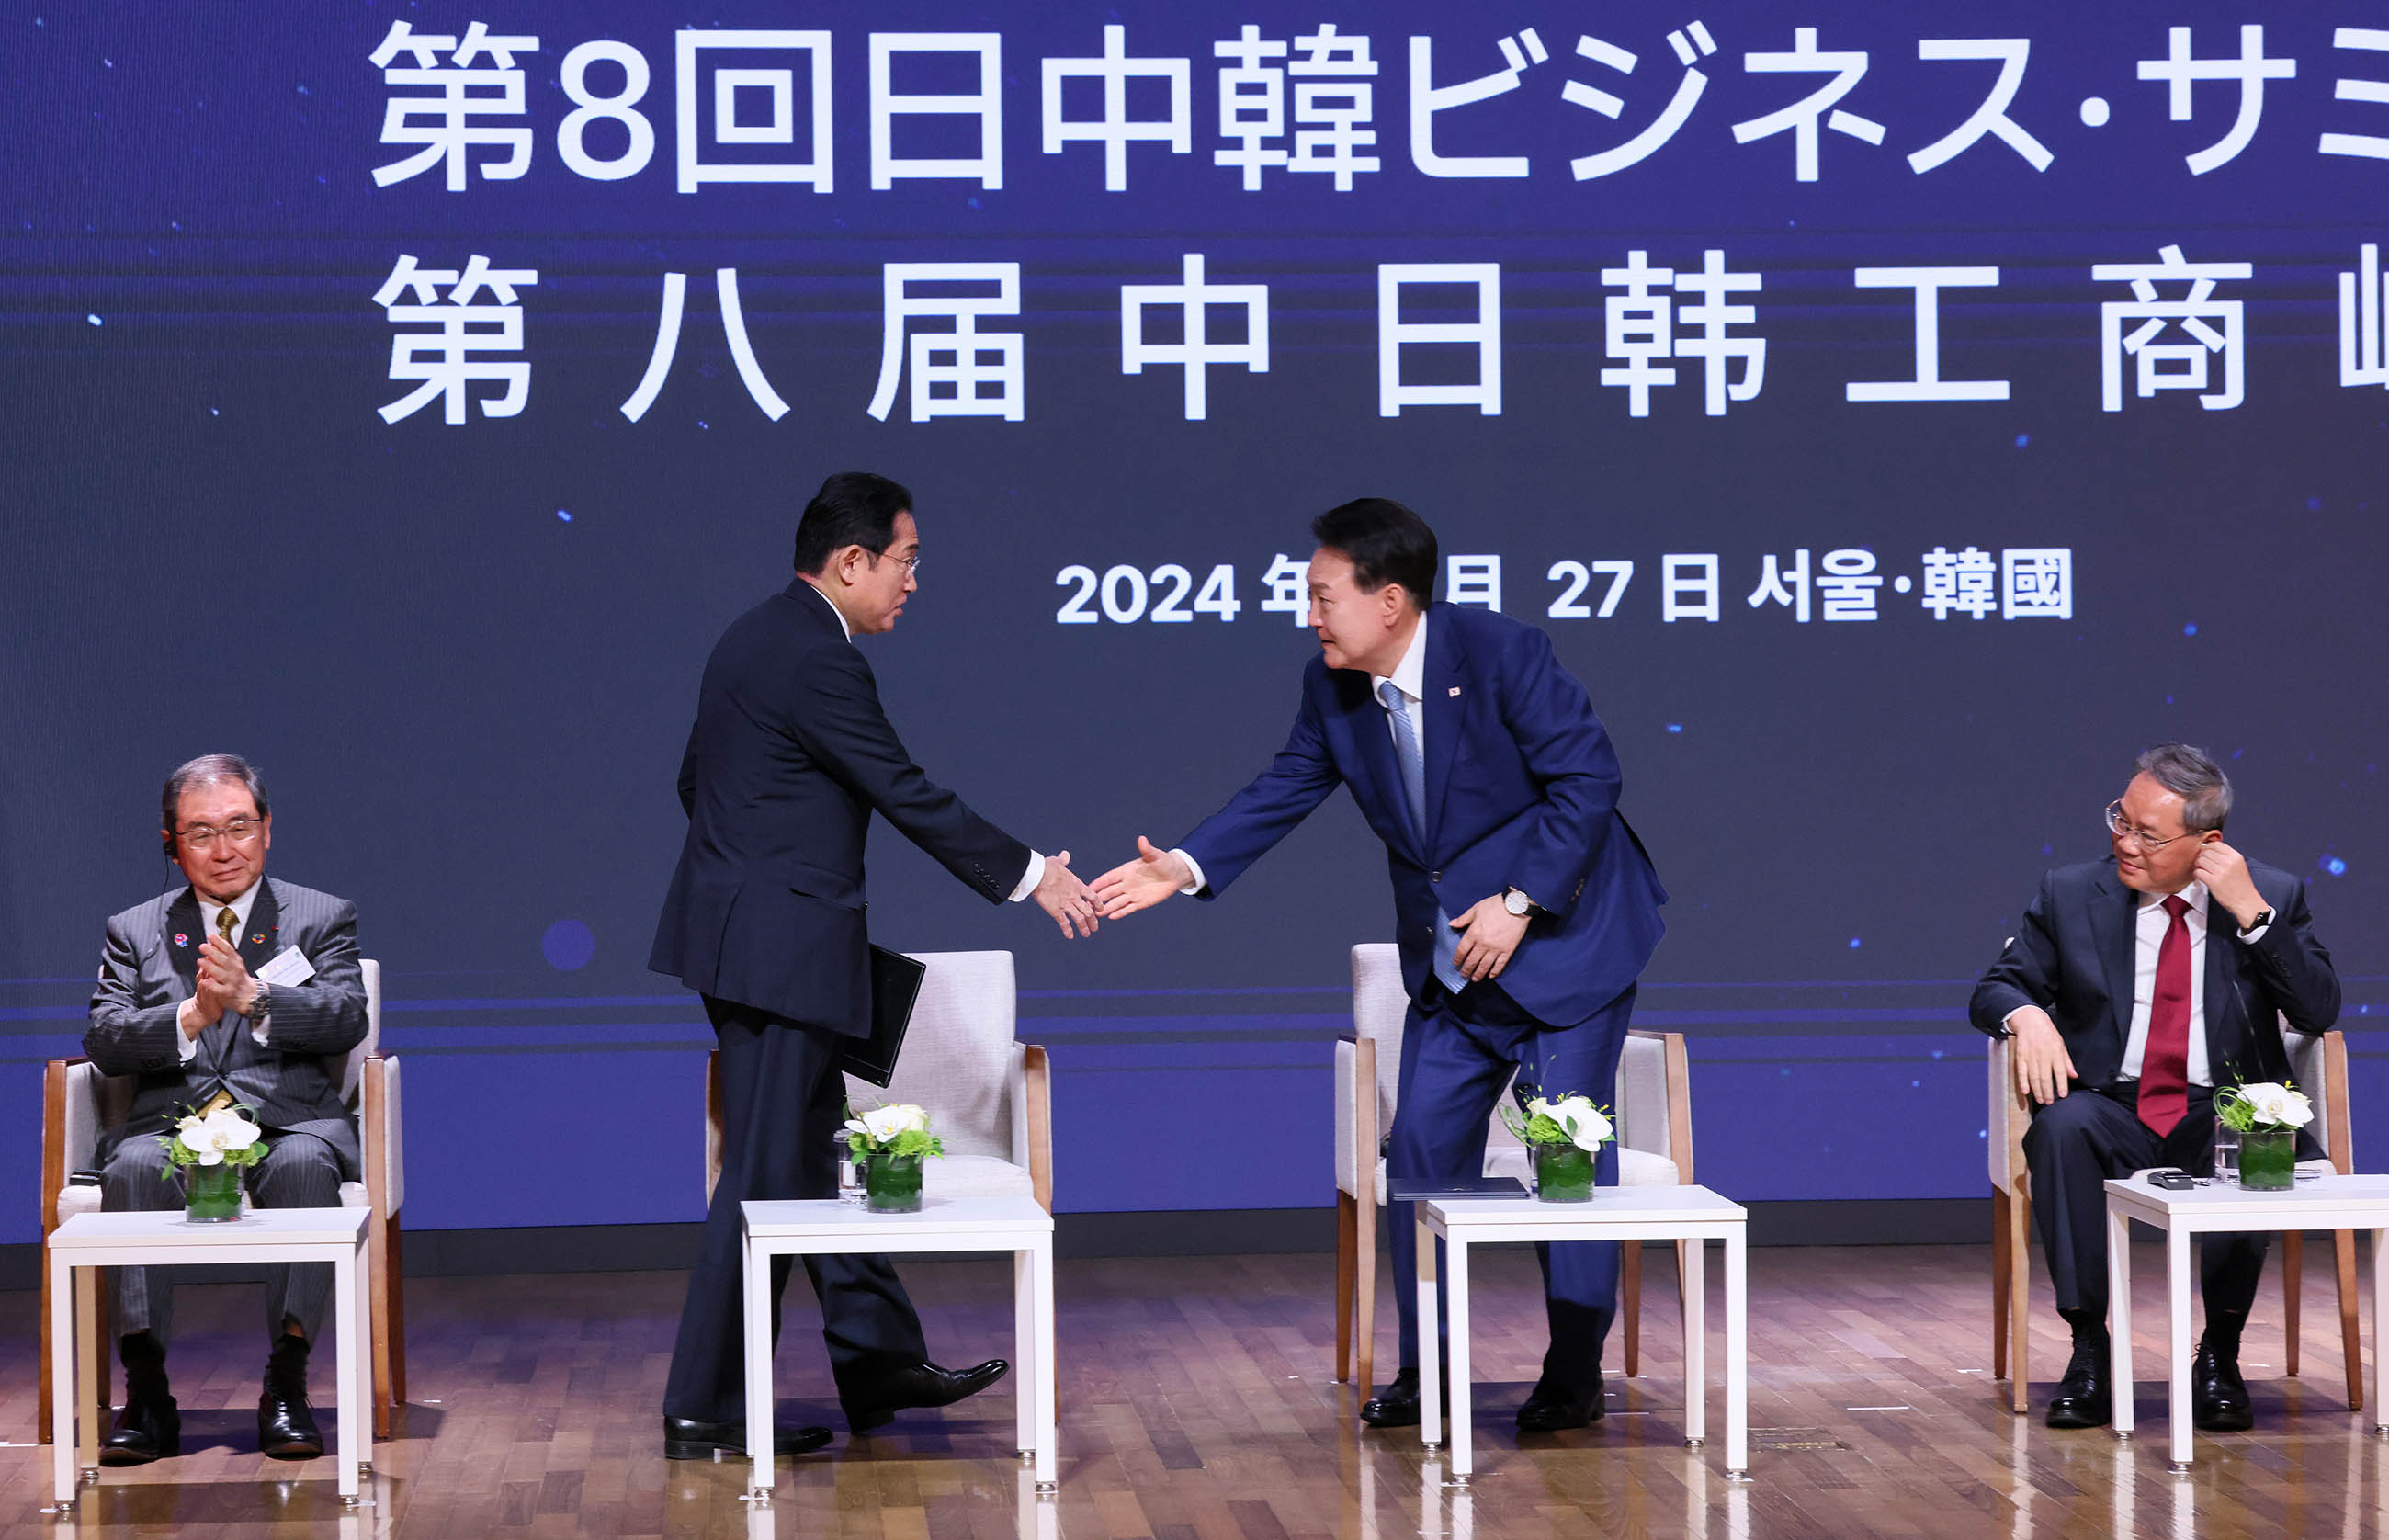 Prime Minister Kishida attending the Japan-China-ROK Business Summit (8)